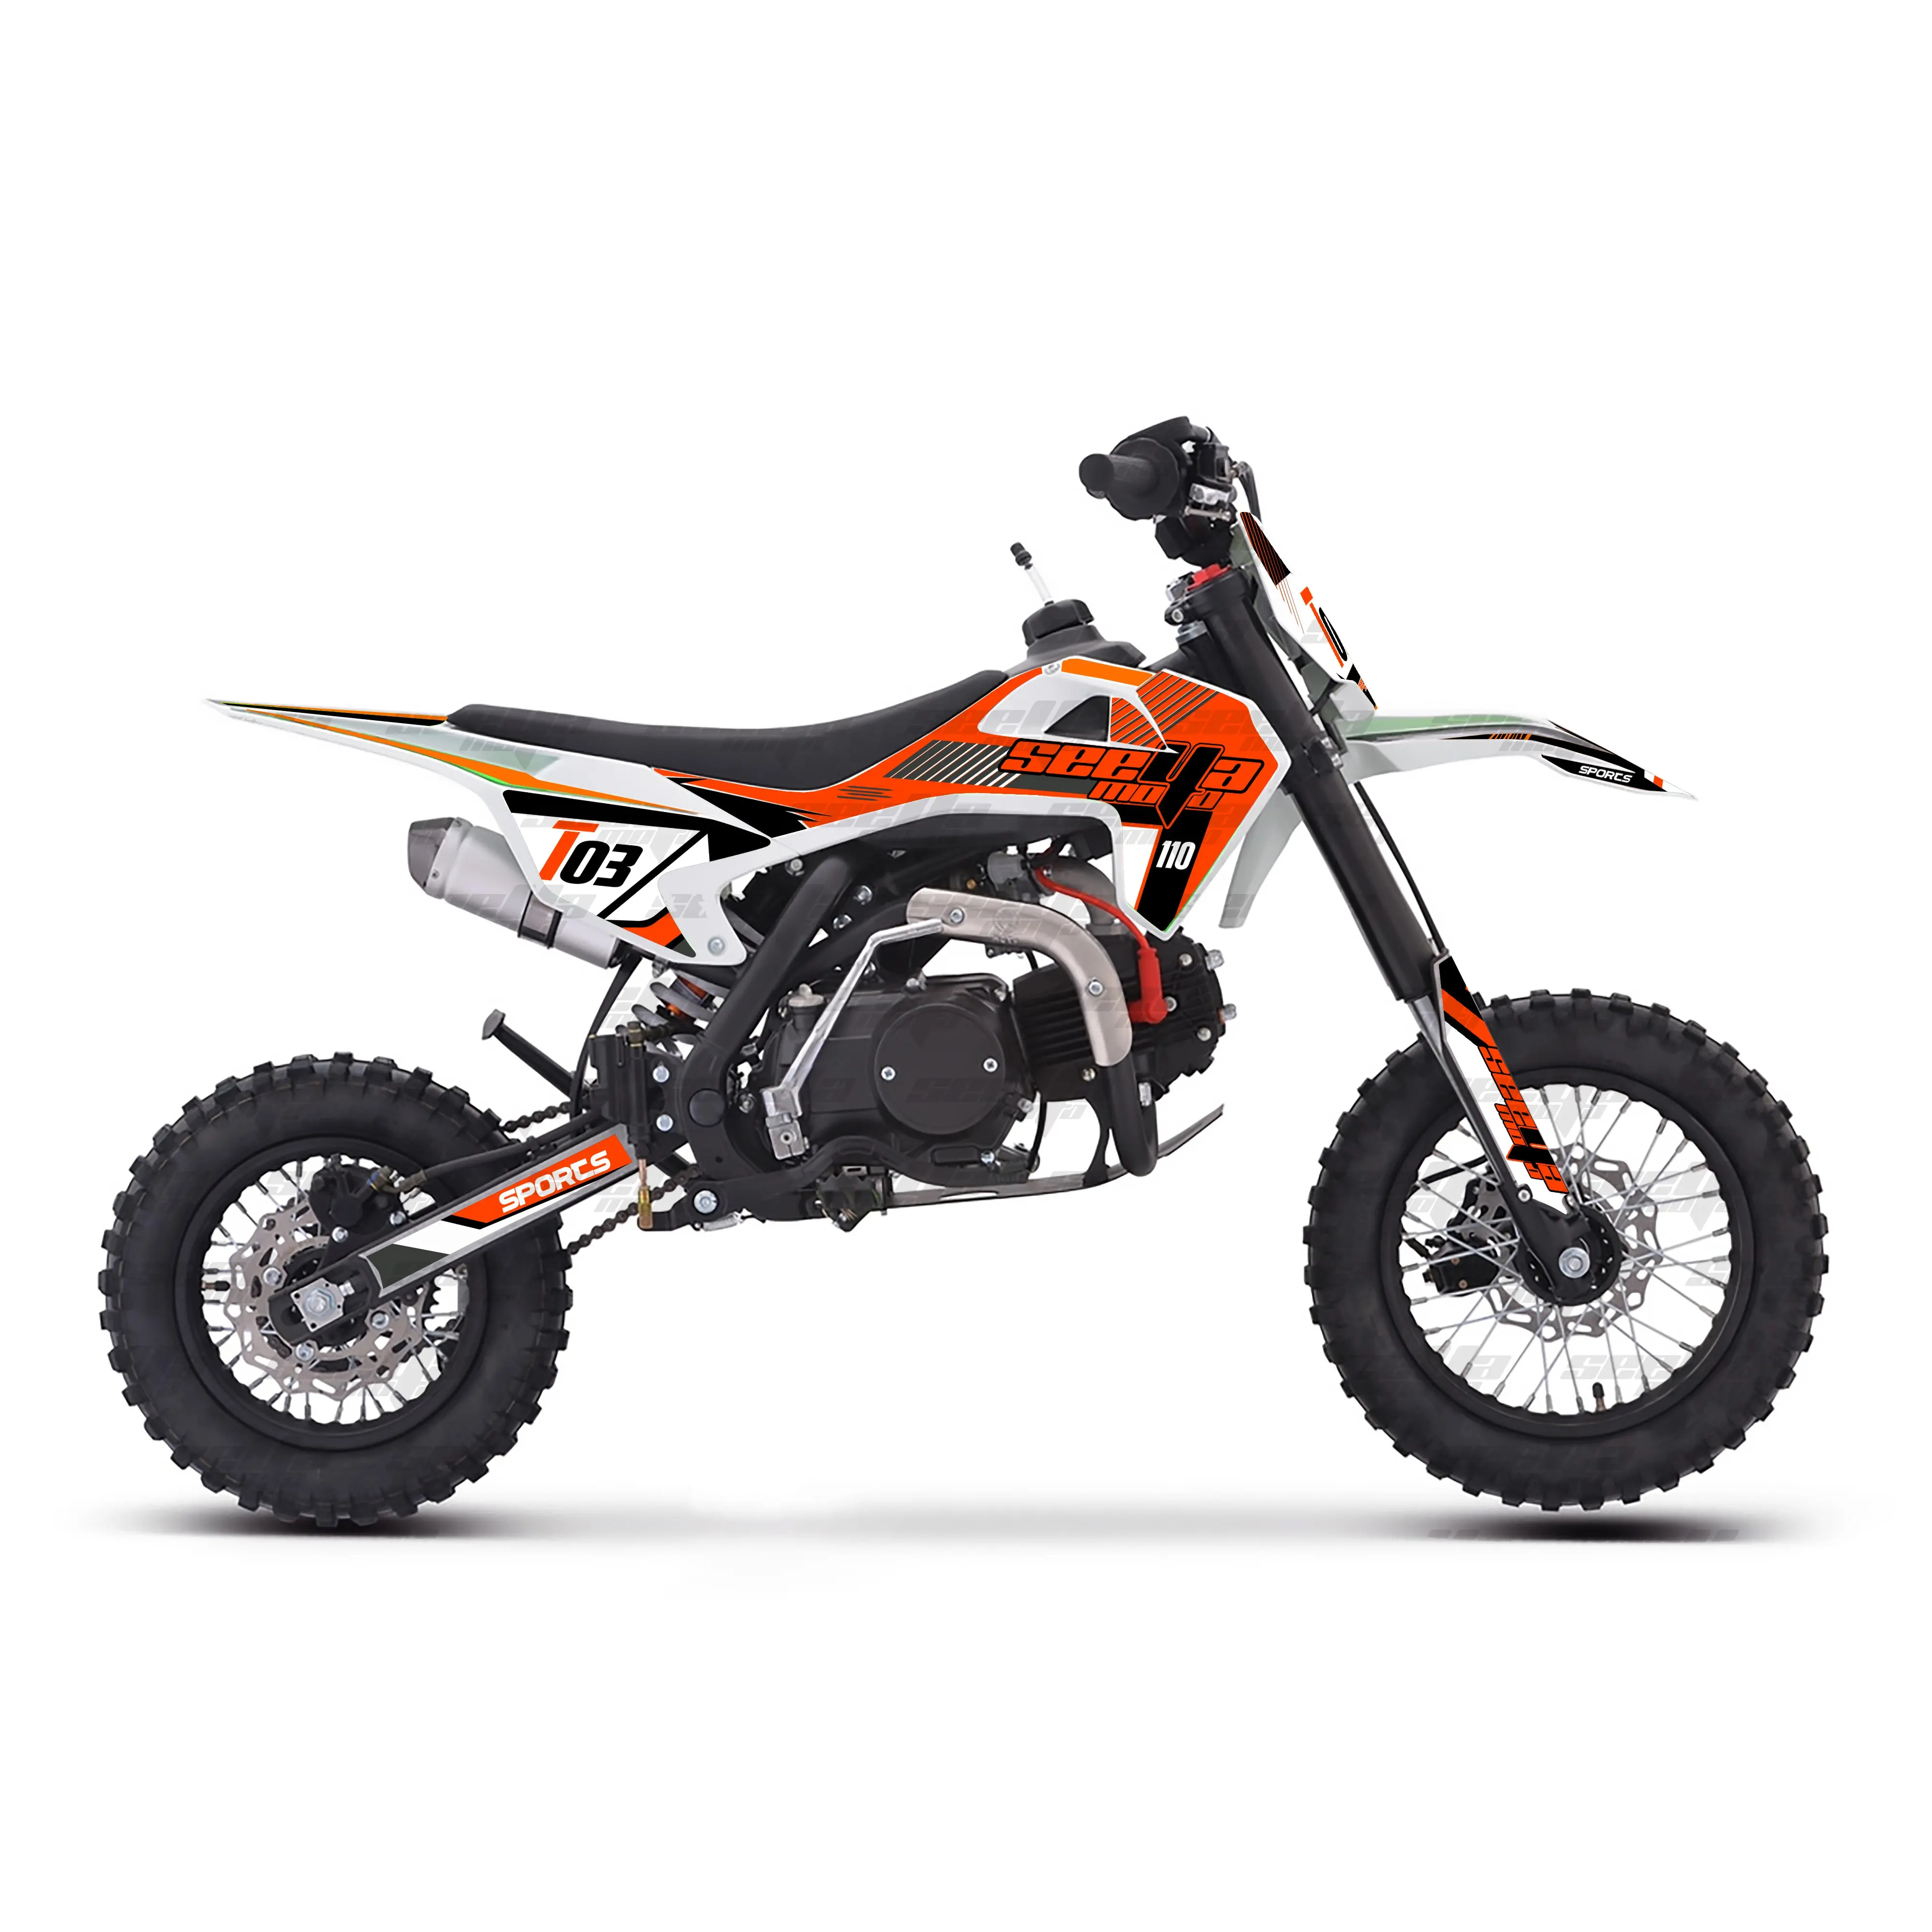 New Orange 110 MOTO CROSS Seeya Offroad halbautomat isches Pitbike Kinder Dirt Bike Cross Motorrad T03 mit CE